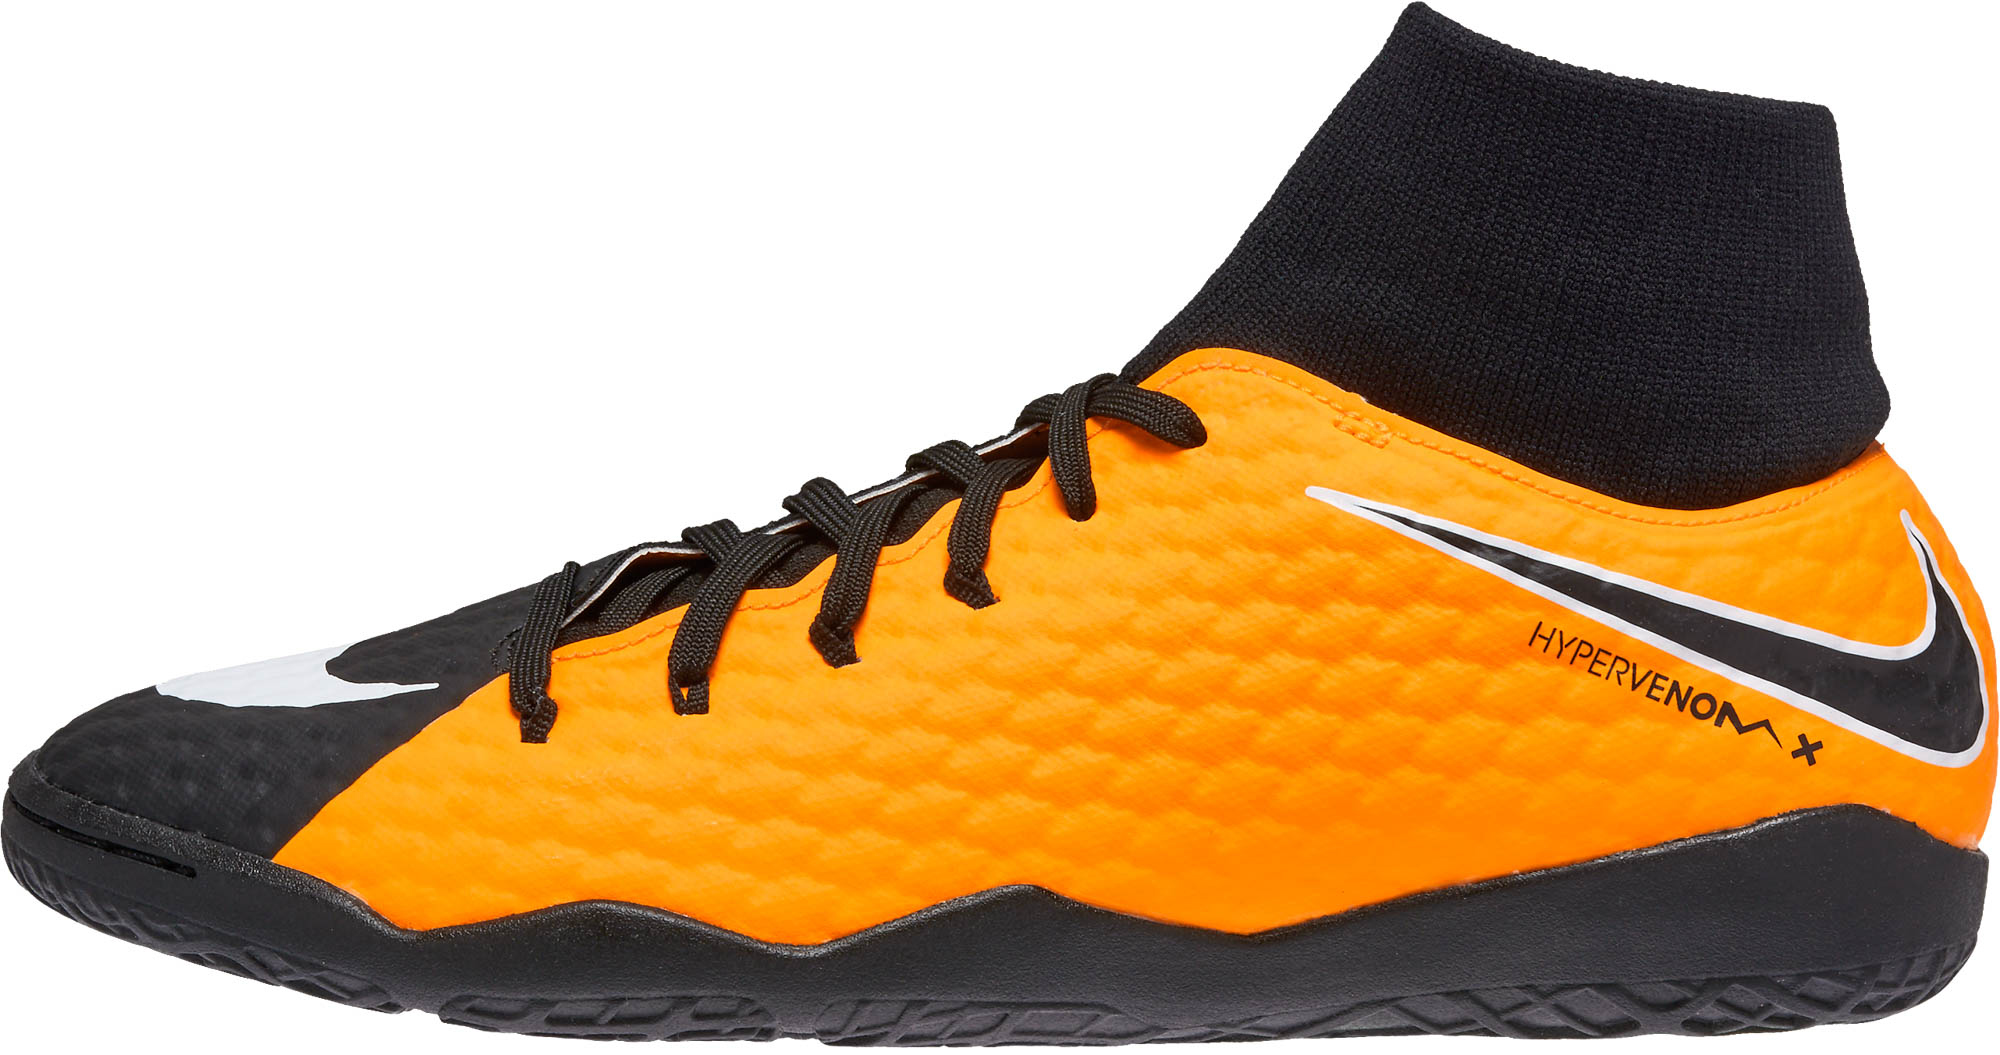 Nike HypervenomX Phelon III DF Indoor Shoes - Laser Orange & Black - Soccer  Master